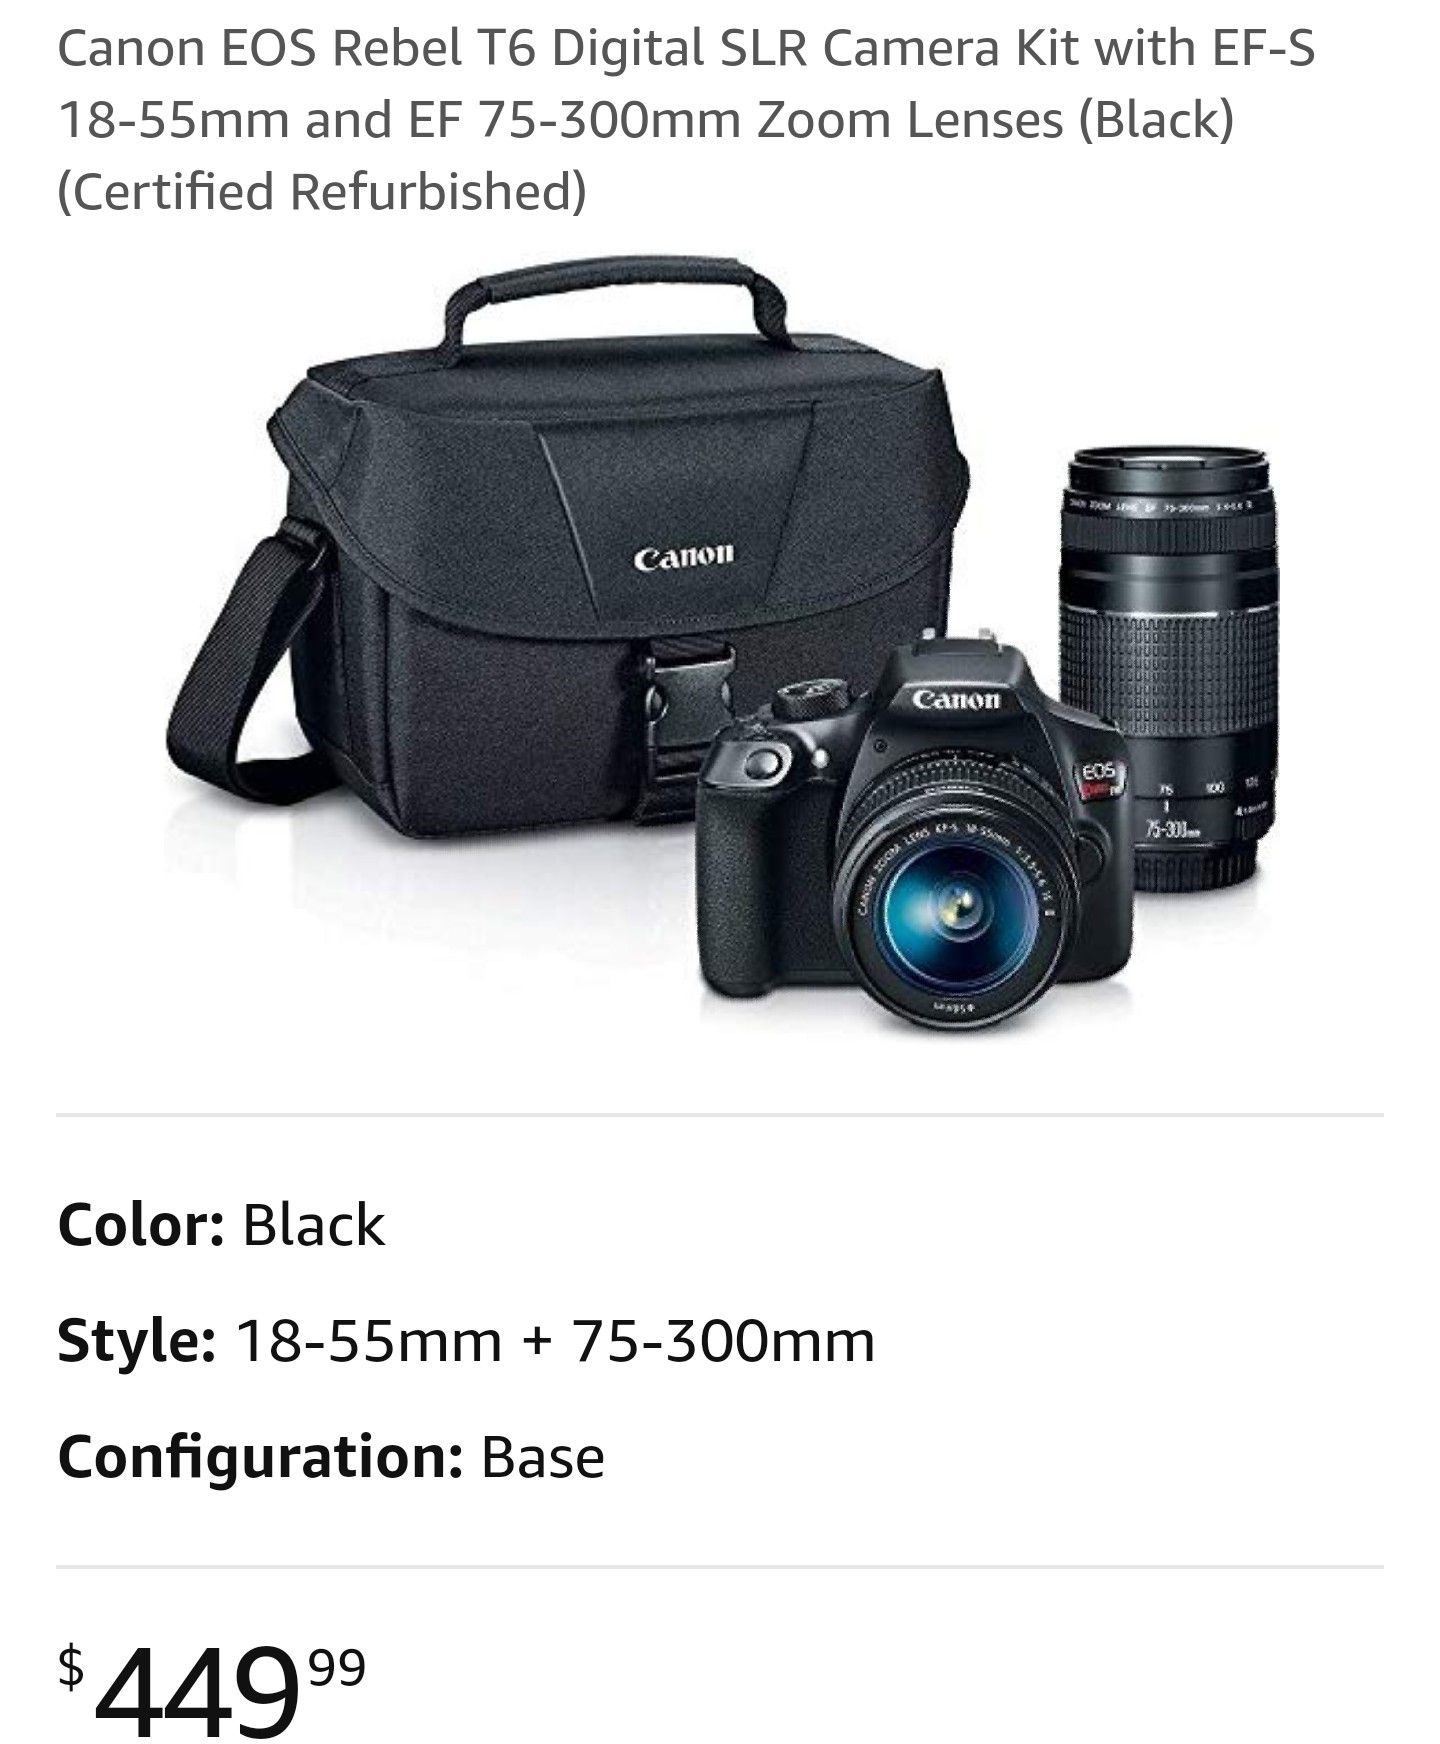 Canon Digital SLR Camera Kit [EOS Rebel T6] with EF-S 18-55mm and EF 75-300mm Zoom Lenses - Black